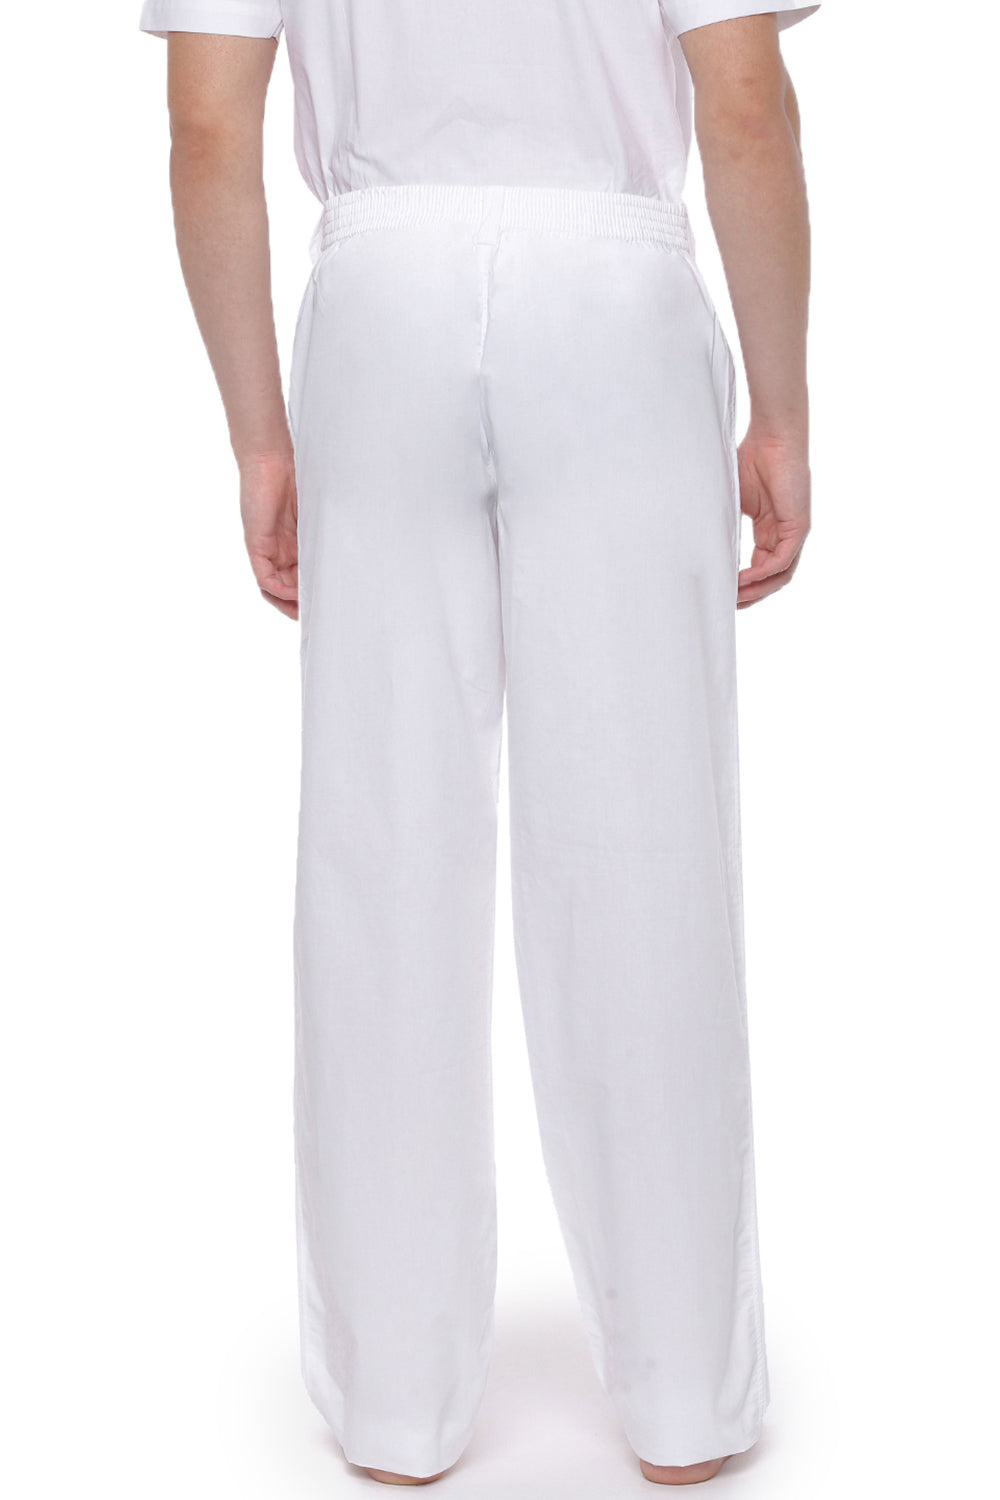 Raymond Formal Trousers  Buy Raymond White Trousers Online  Nykaa Fashion